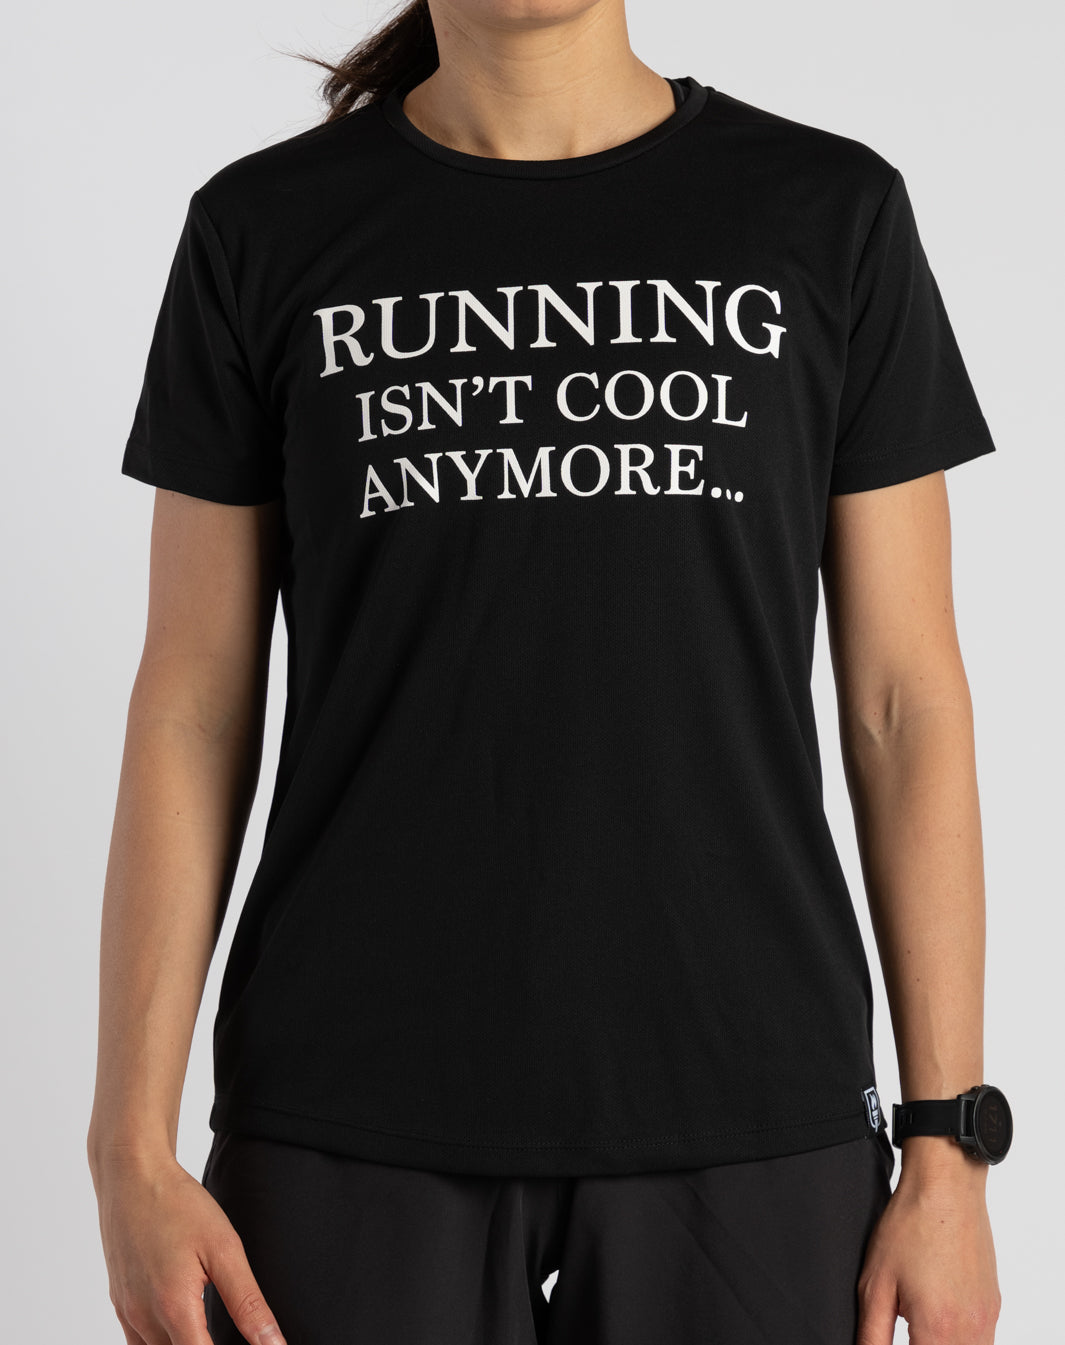 "Running isn't cool anymore..." Racing T-Shirt (Female)